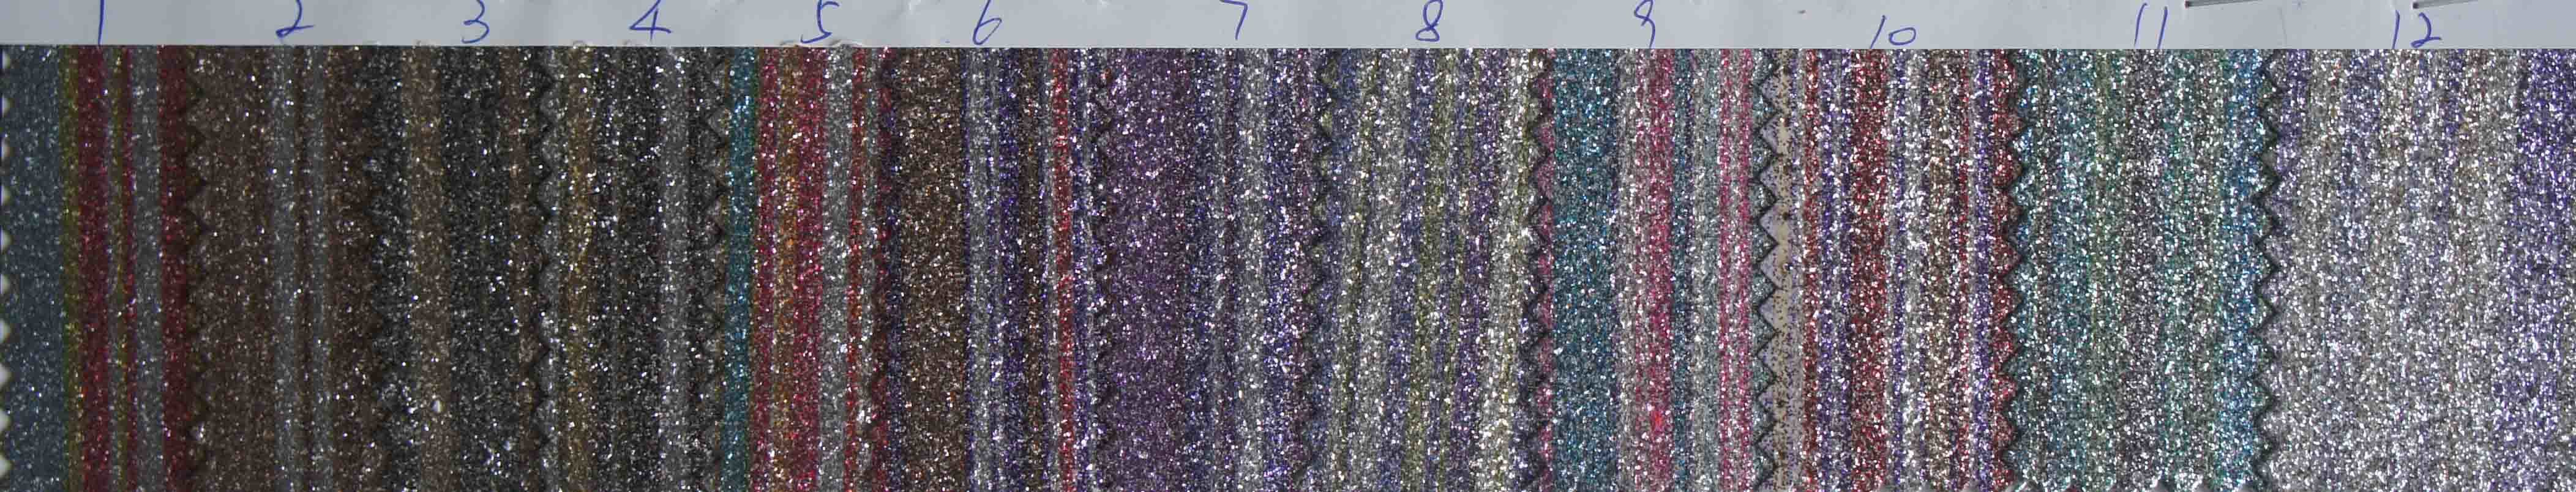 Gl-240 Decorative Shiny Glitter Wallpaper Fabric